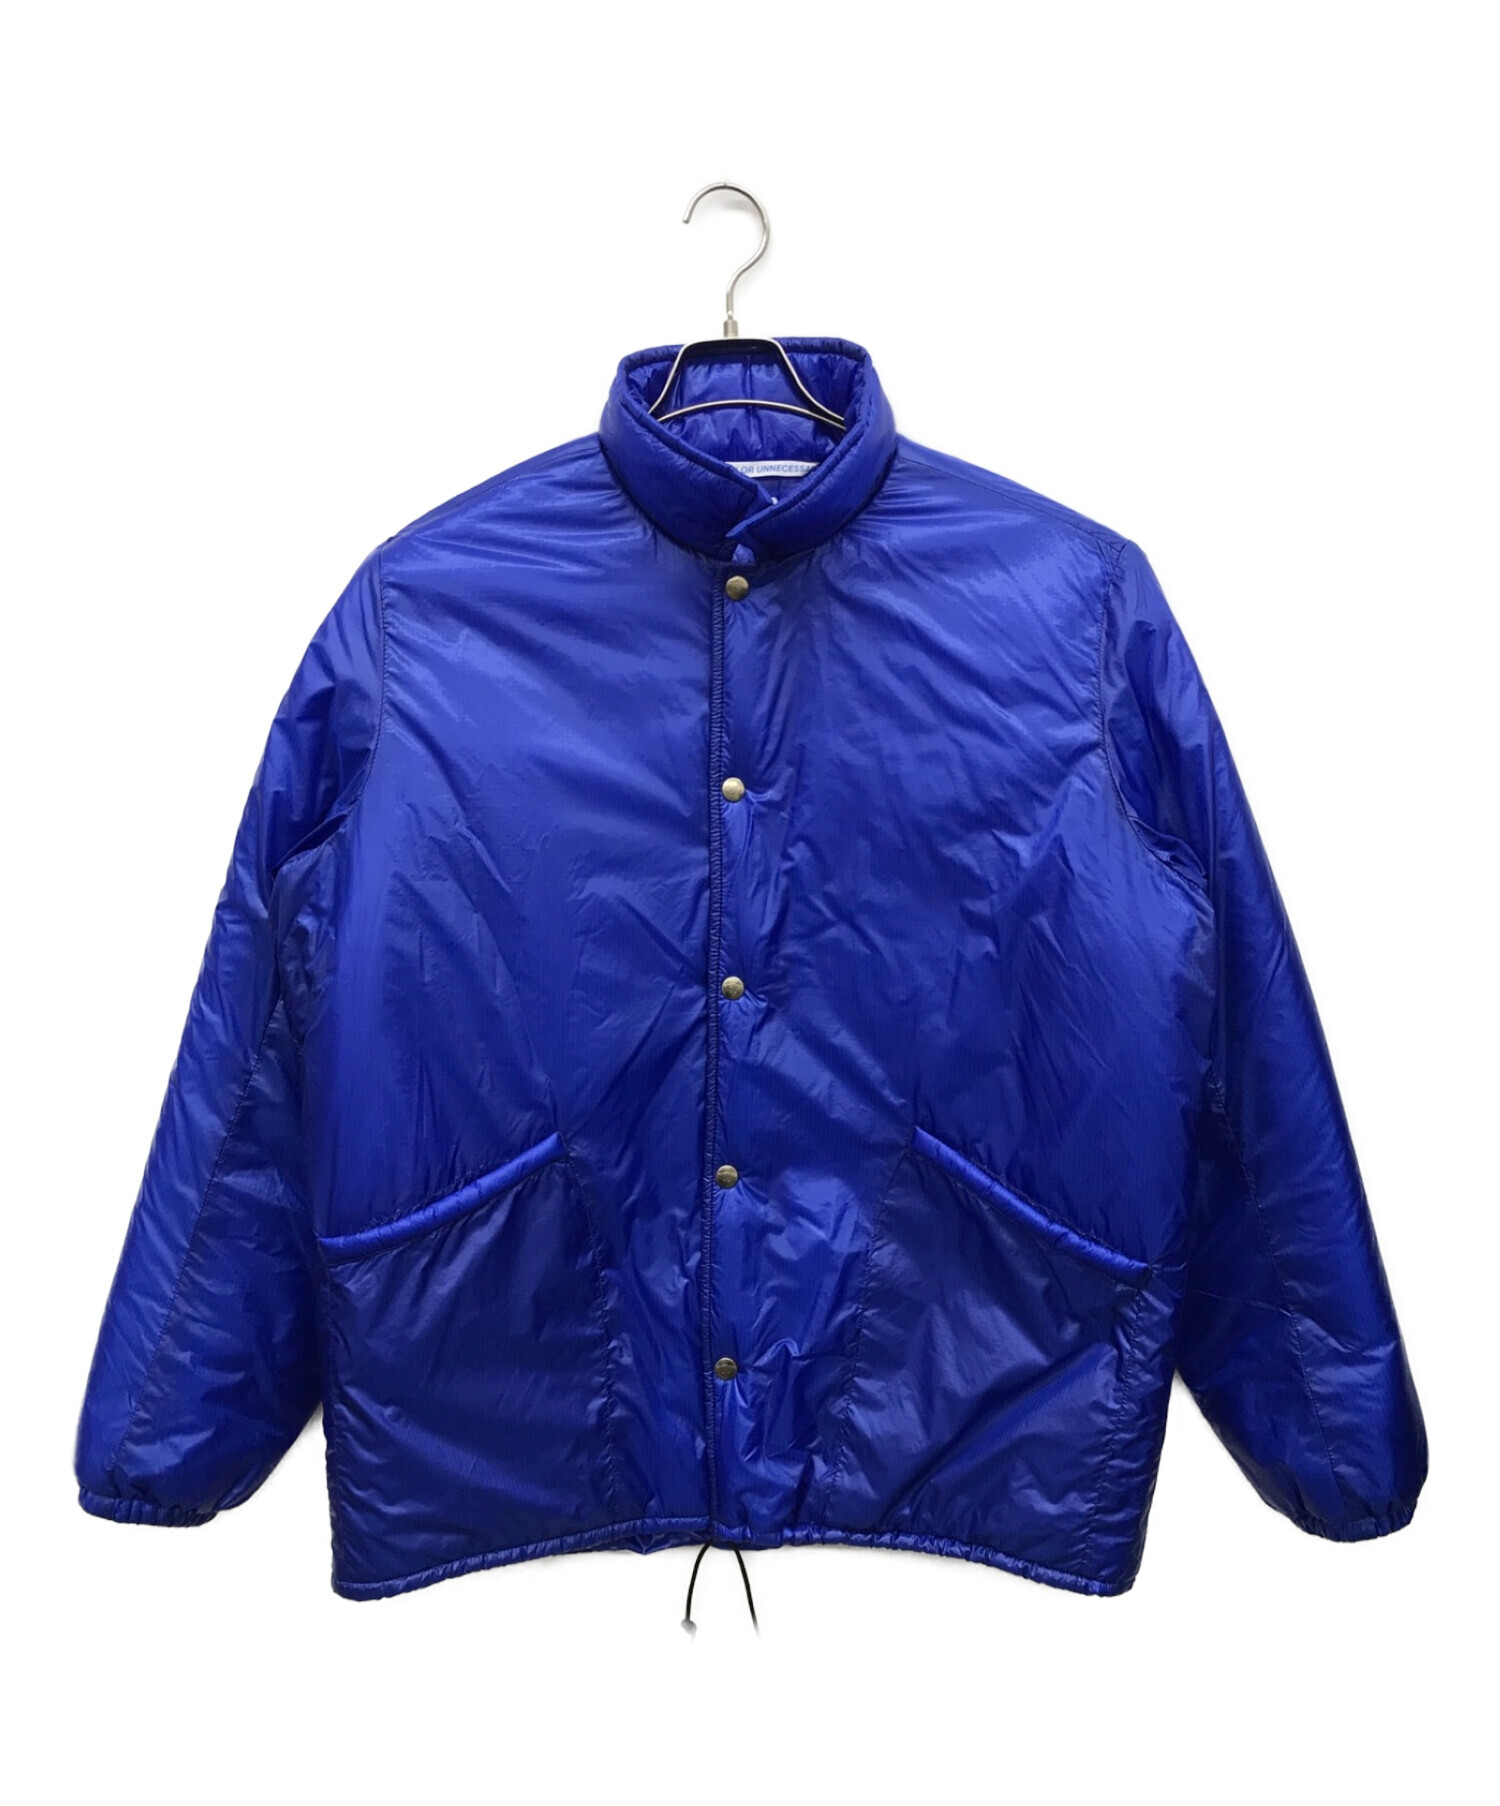 NECESSARY or UNNECESSARY (ネセサリーオアアンネセサリー) 中綿ジャケット ブルー サイズ:3